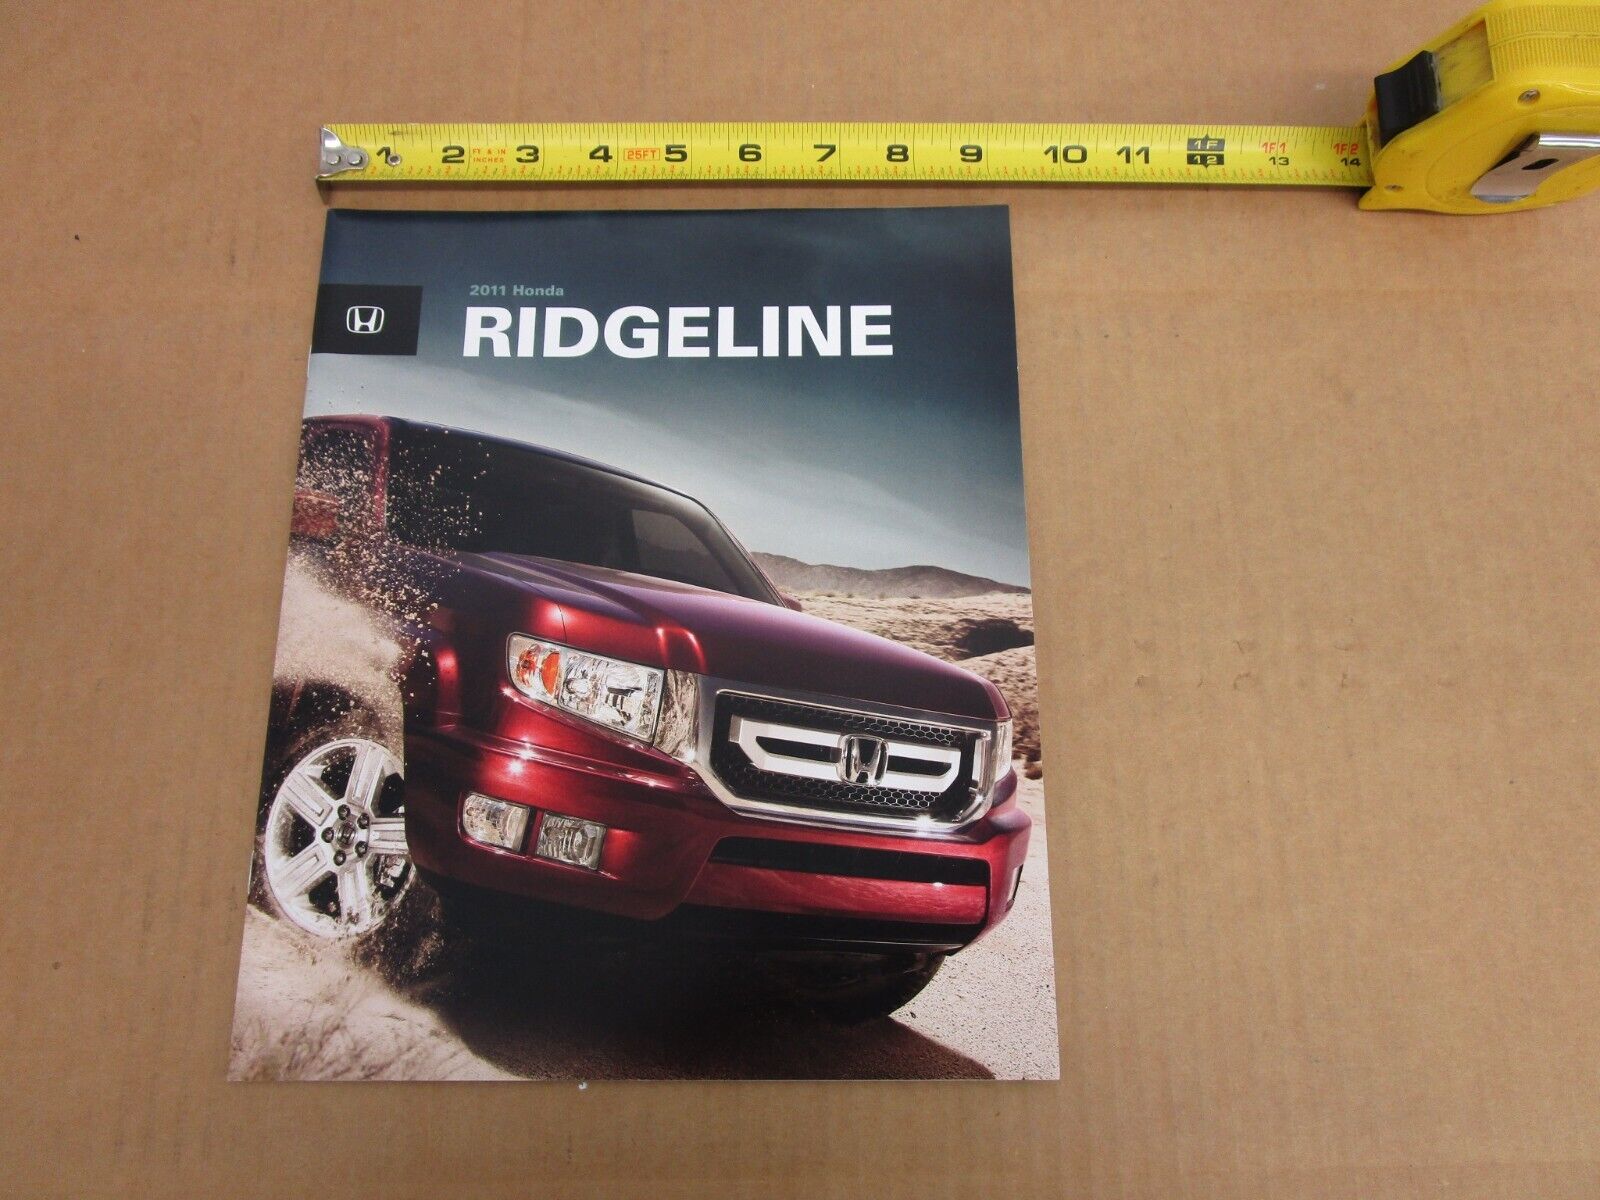 2011 Honda Ridgeline pickup truck sales brochure 16 page ORIGINAL literature